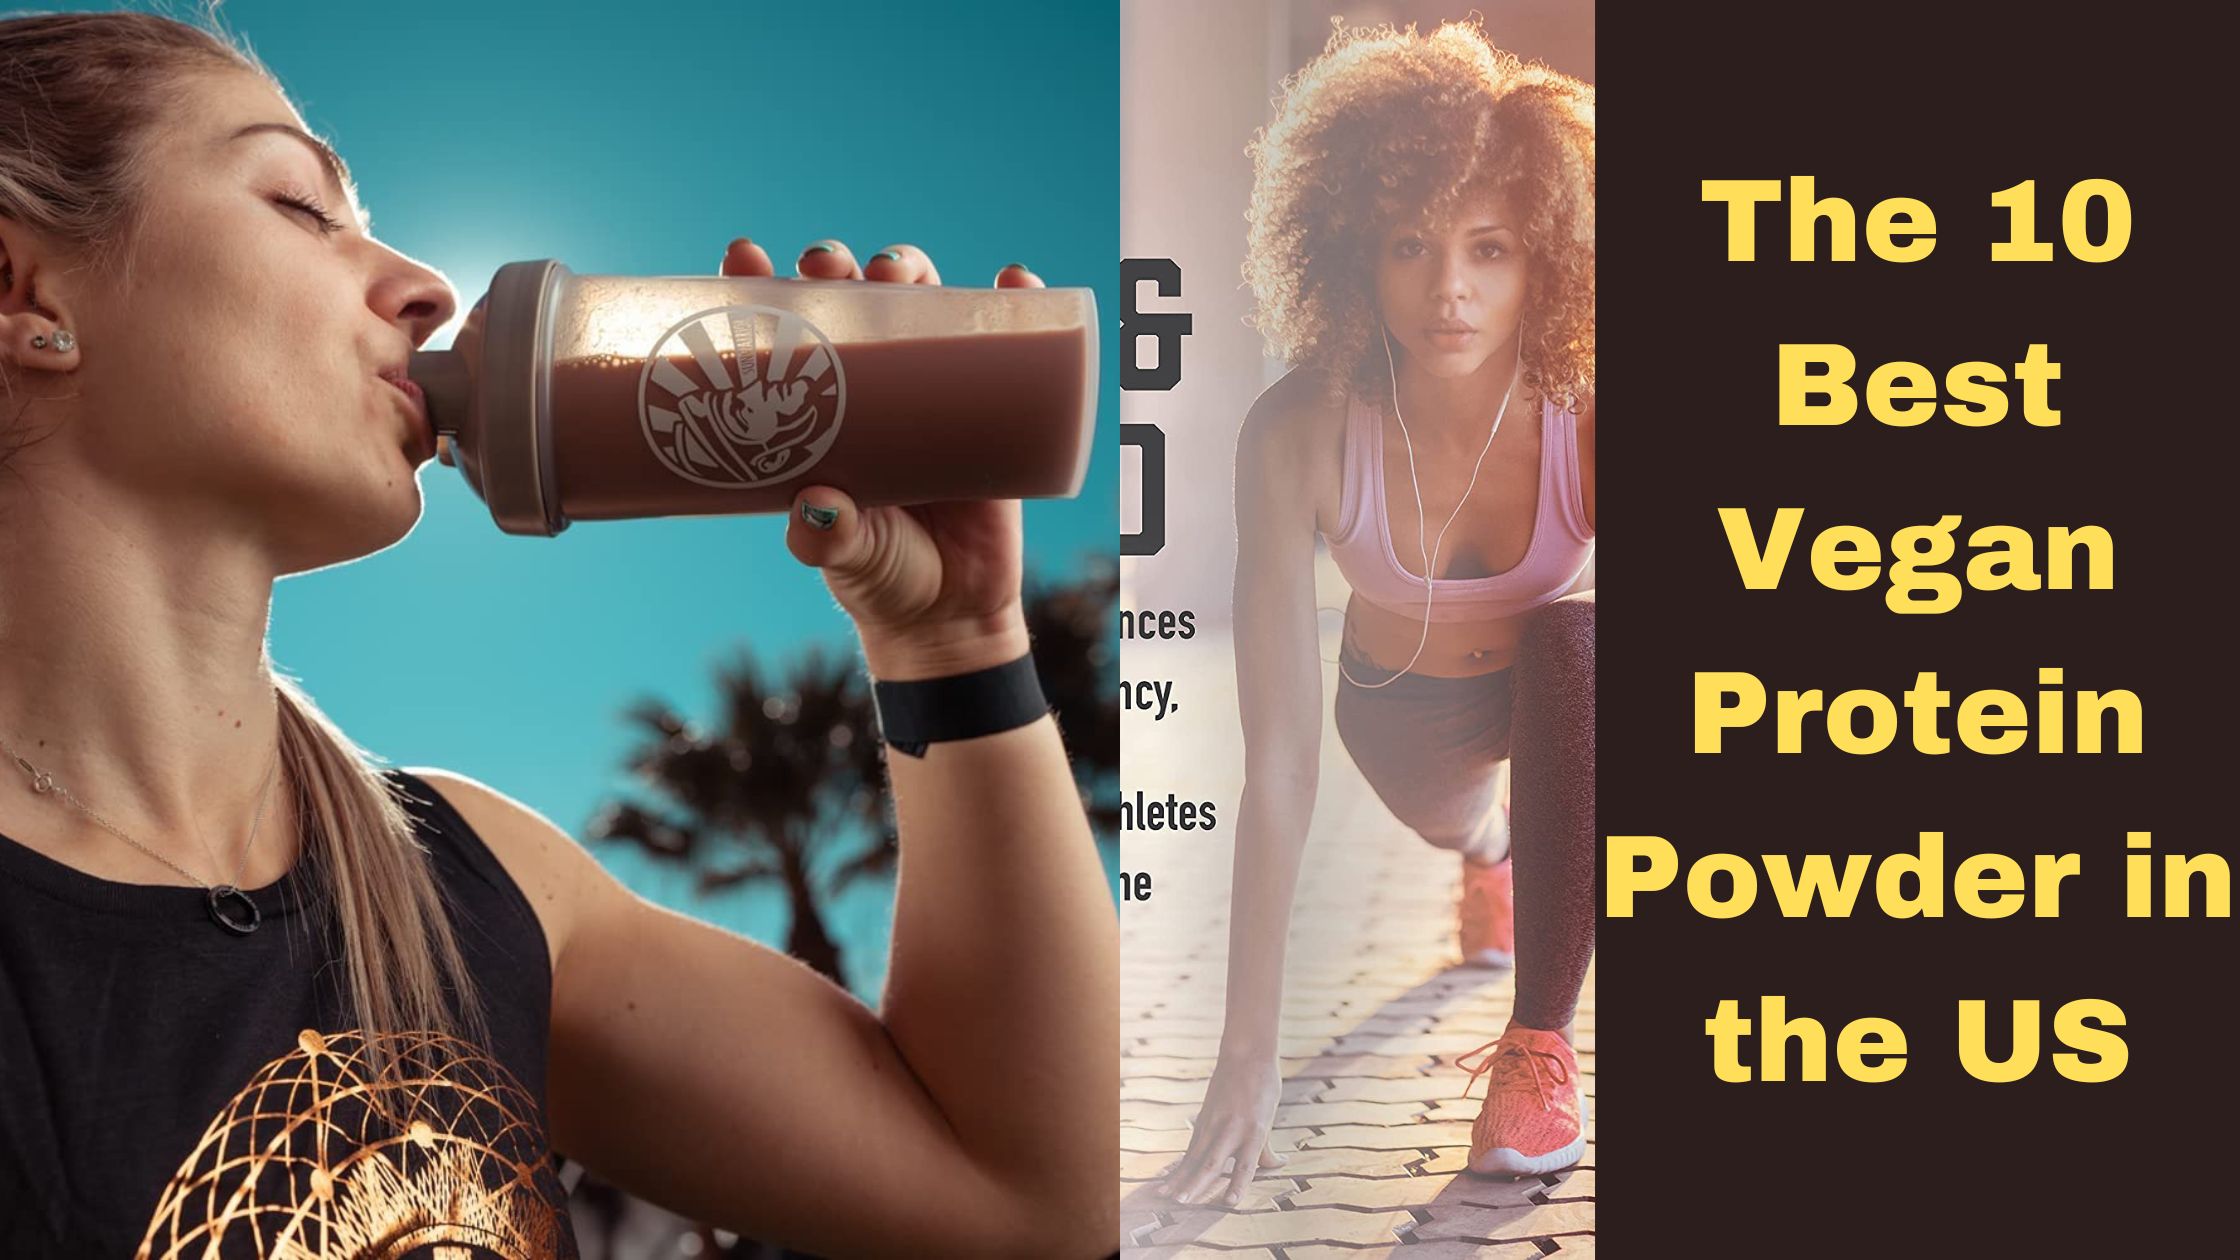 The 10 Best Vegan Protein Powder in the US